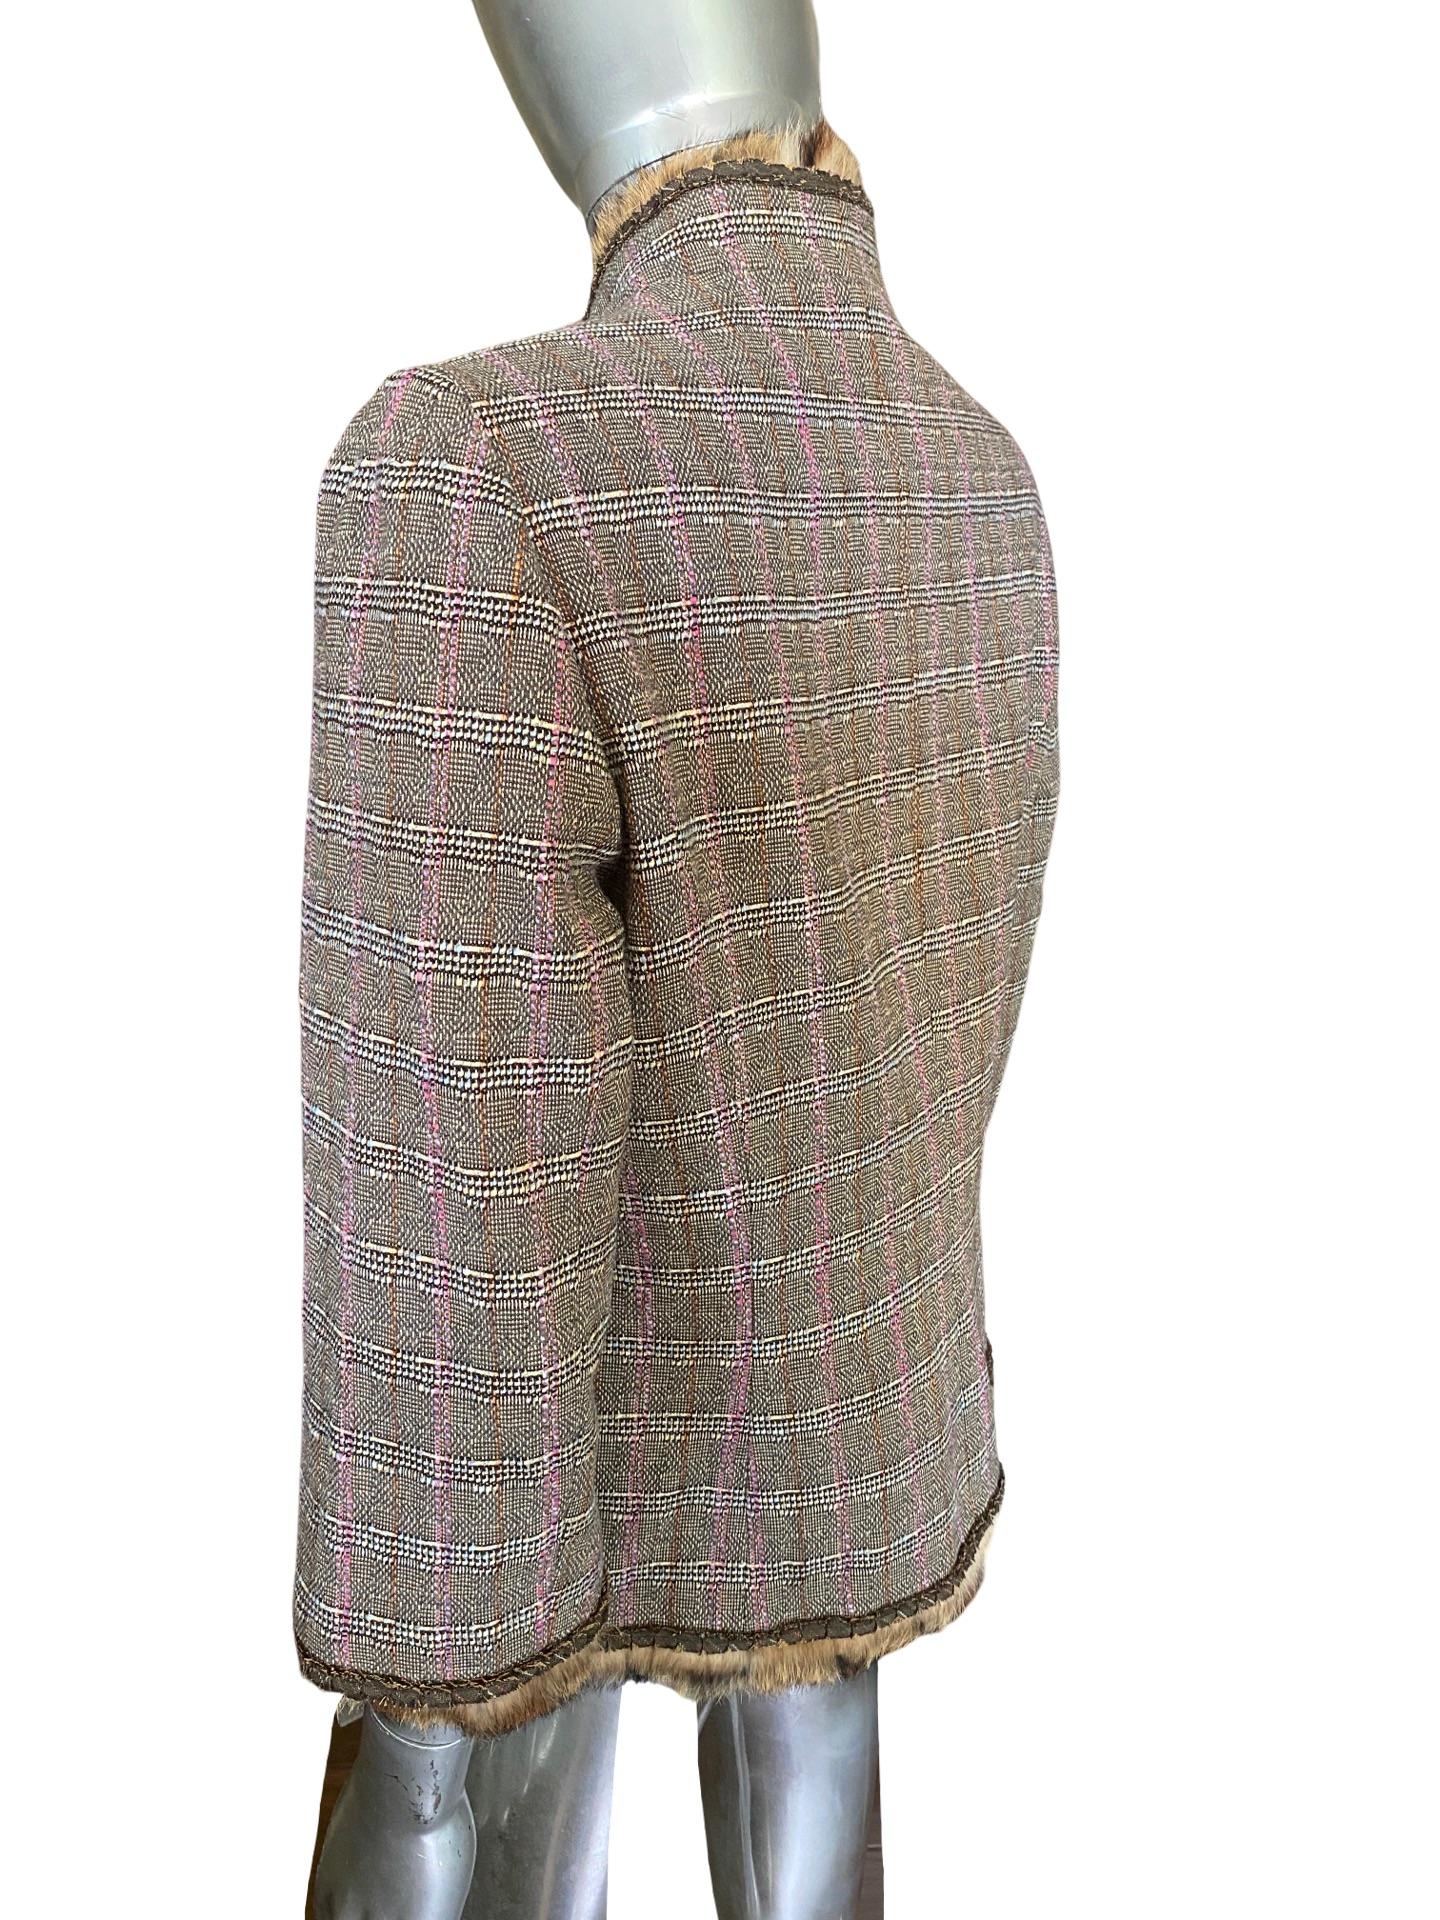 Worth New York Chic Brown/Lilac Plaid Suit w/  Fur Trim Jacket Size 10/12 For Sale 9